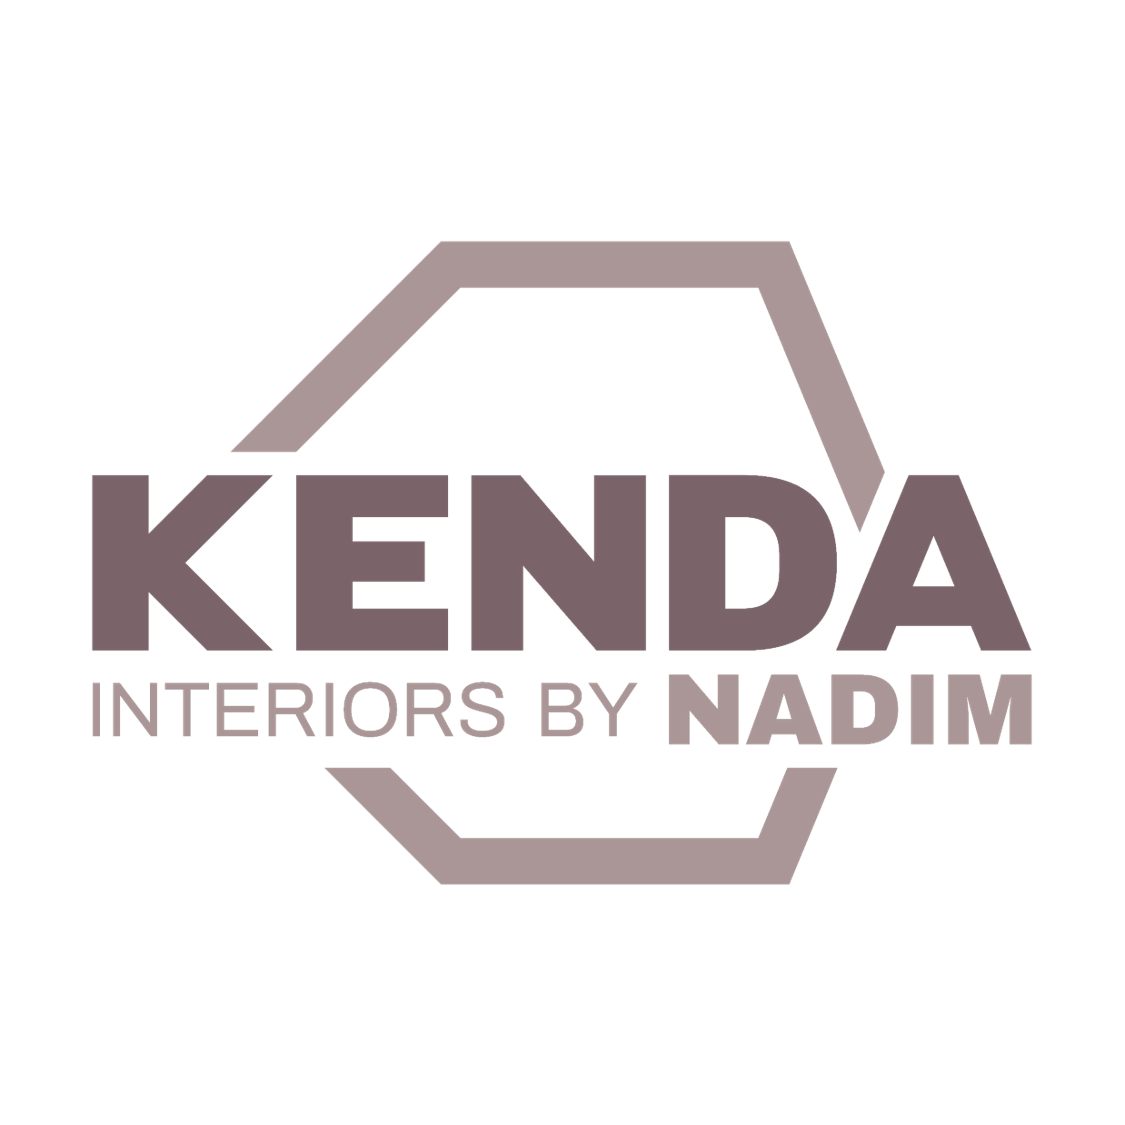 Kenda Interiors - logo